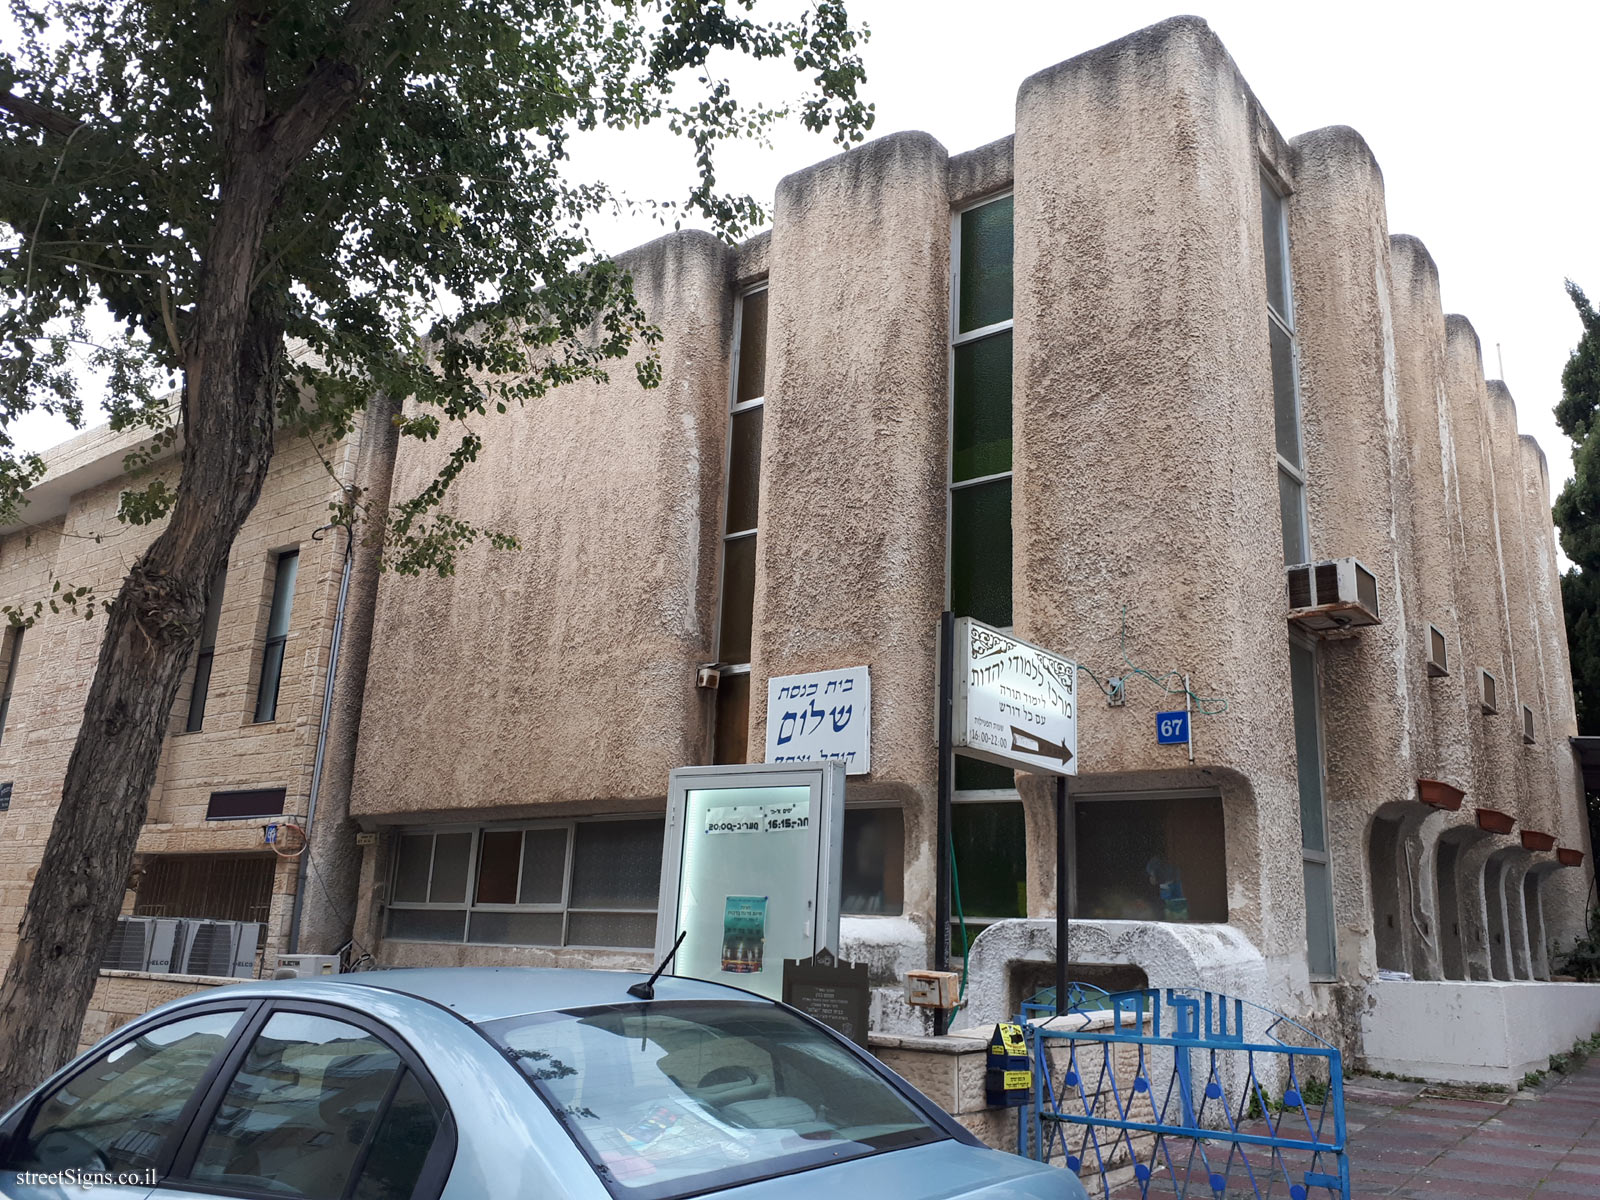 Shalom Synagogue - Yehoshu’a Bin Nun St 67, Tel Aviv-Yafo